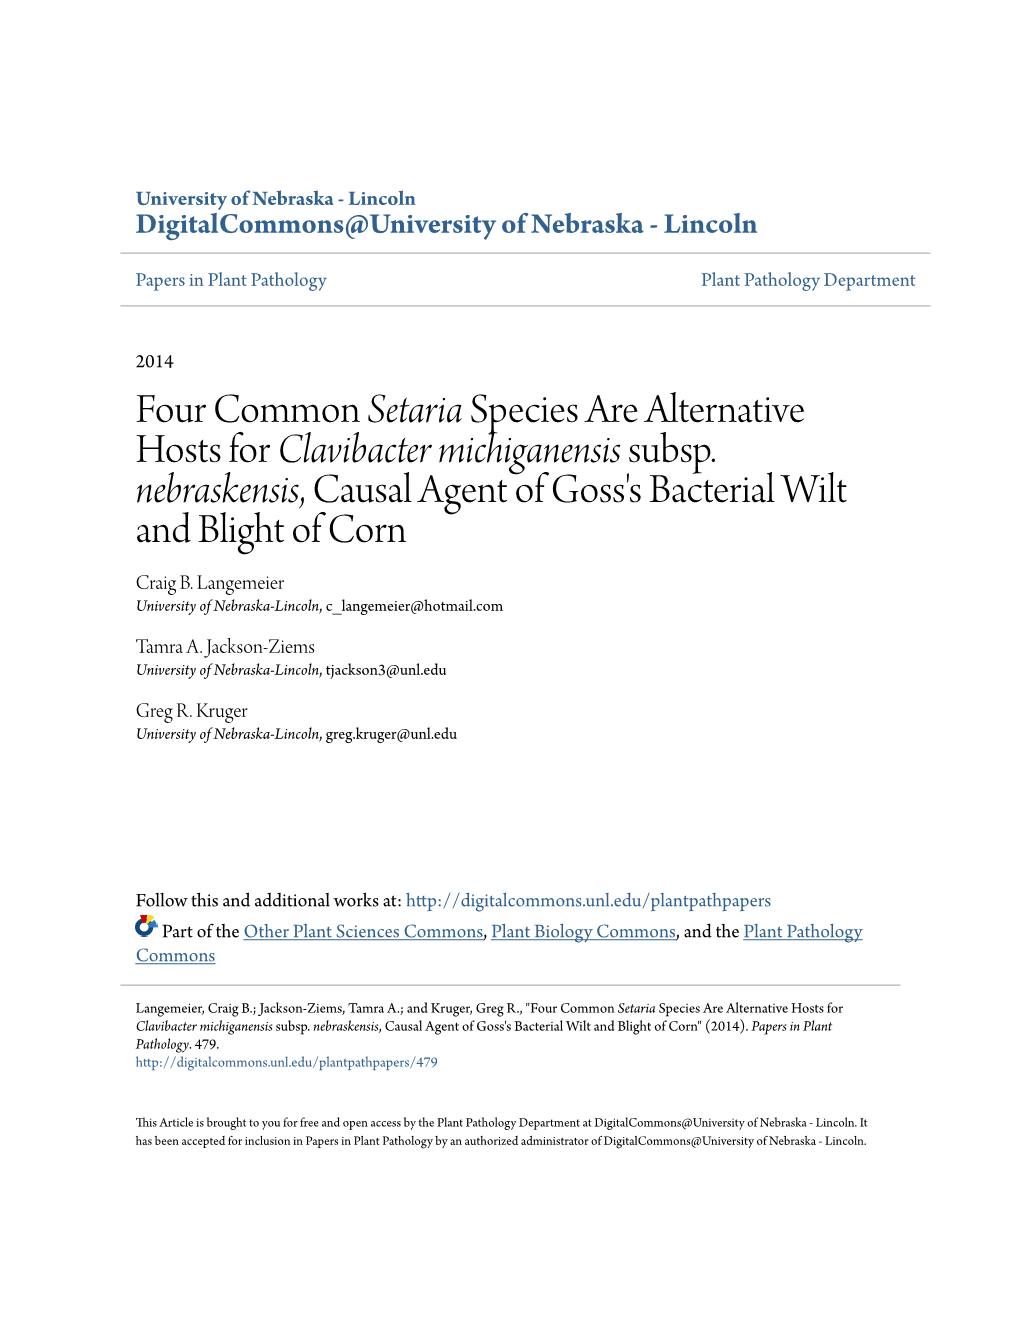 Four Common Setaria Species Are Alternative Hosts for Clavibacter Michiganensis Subsp